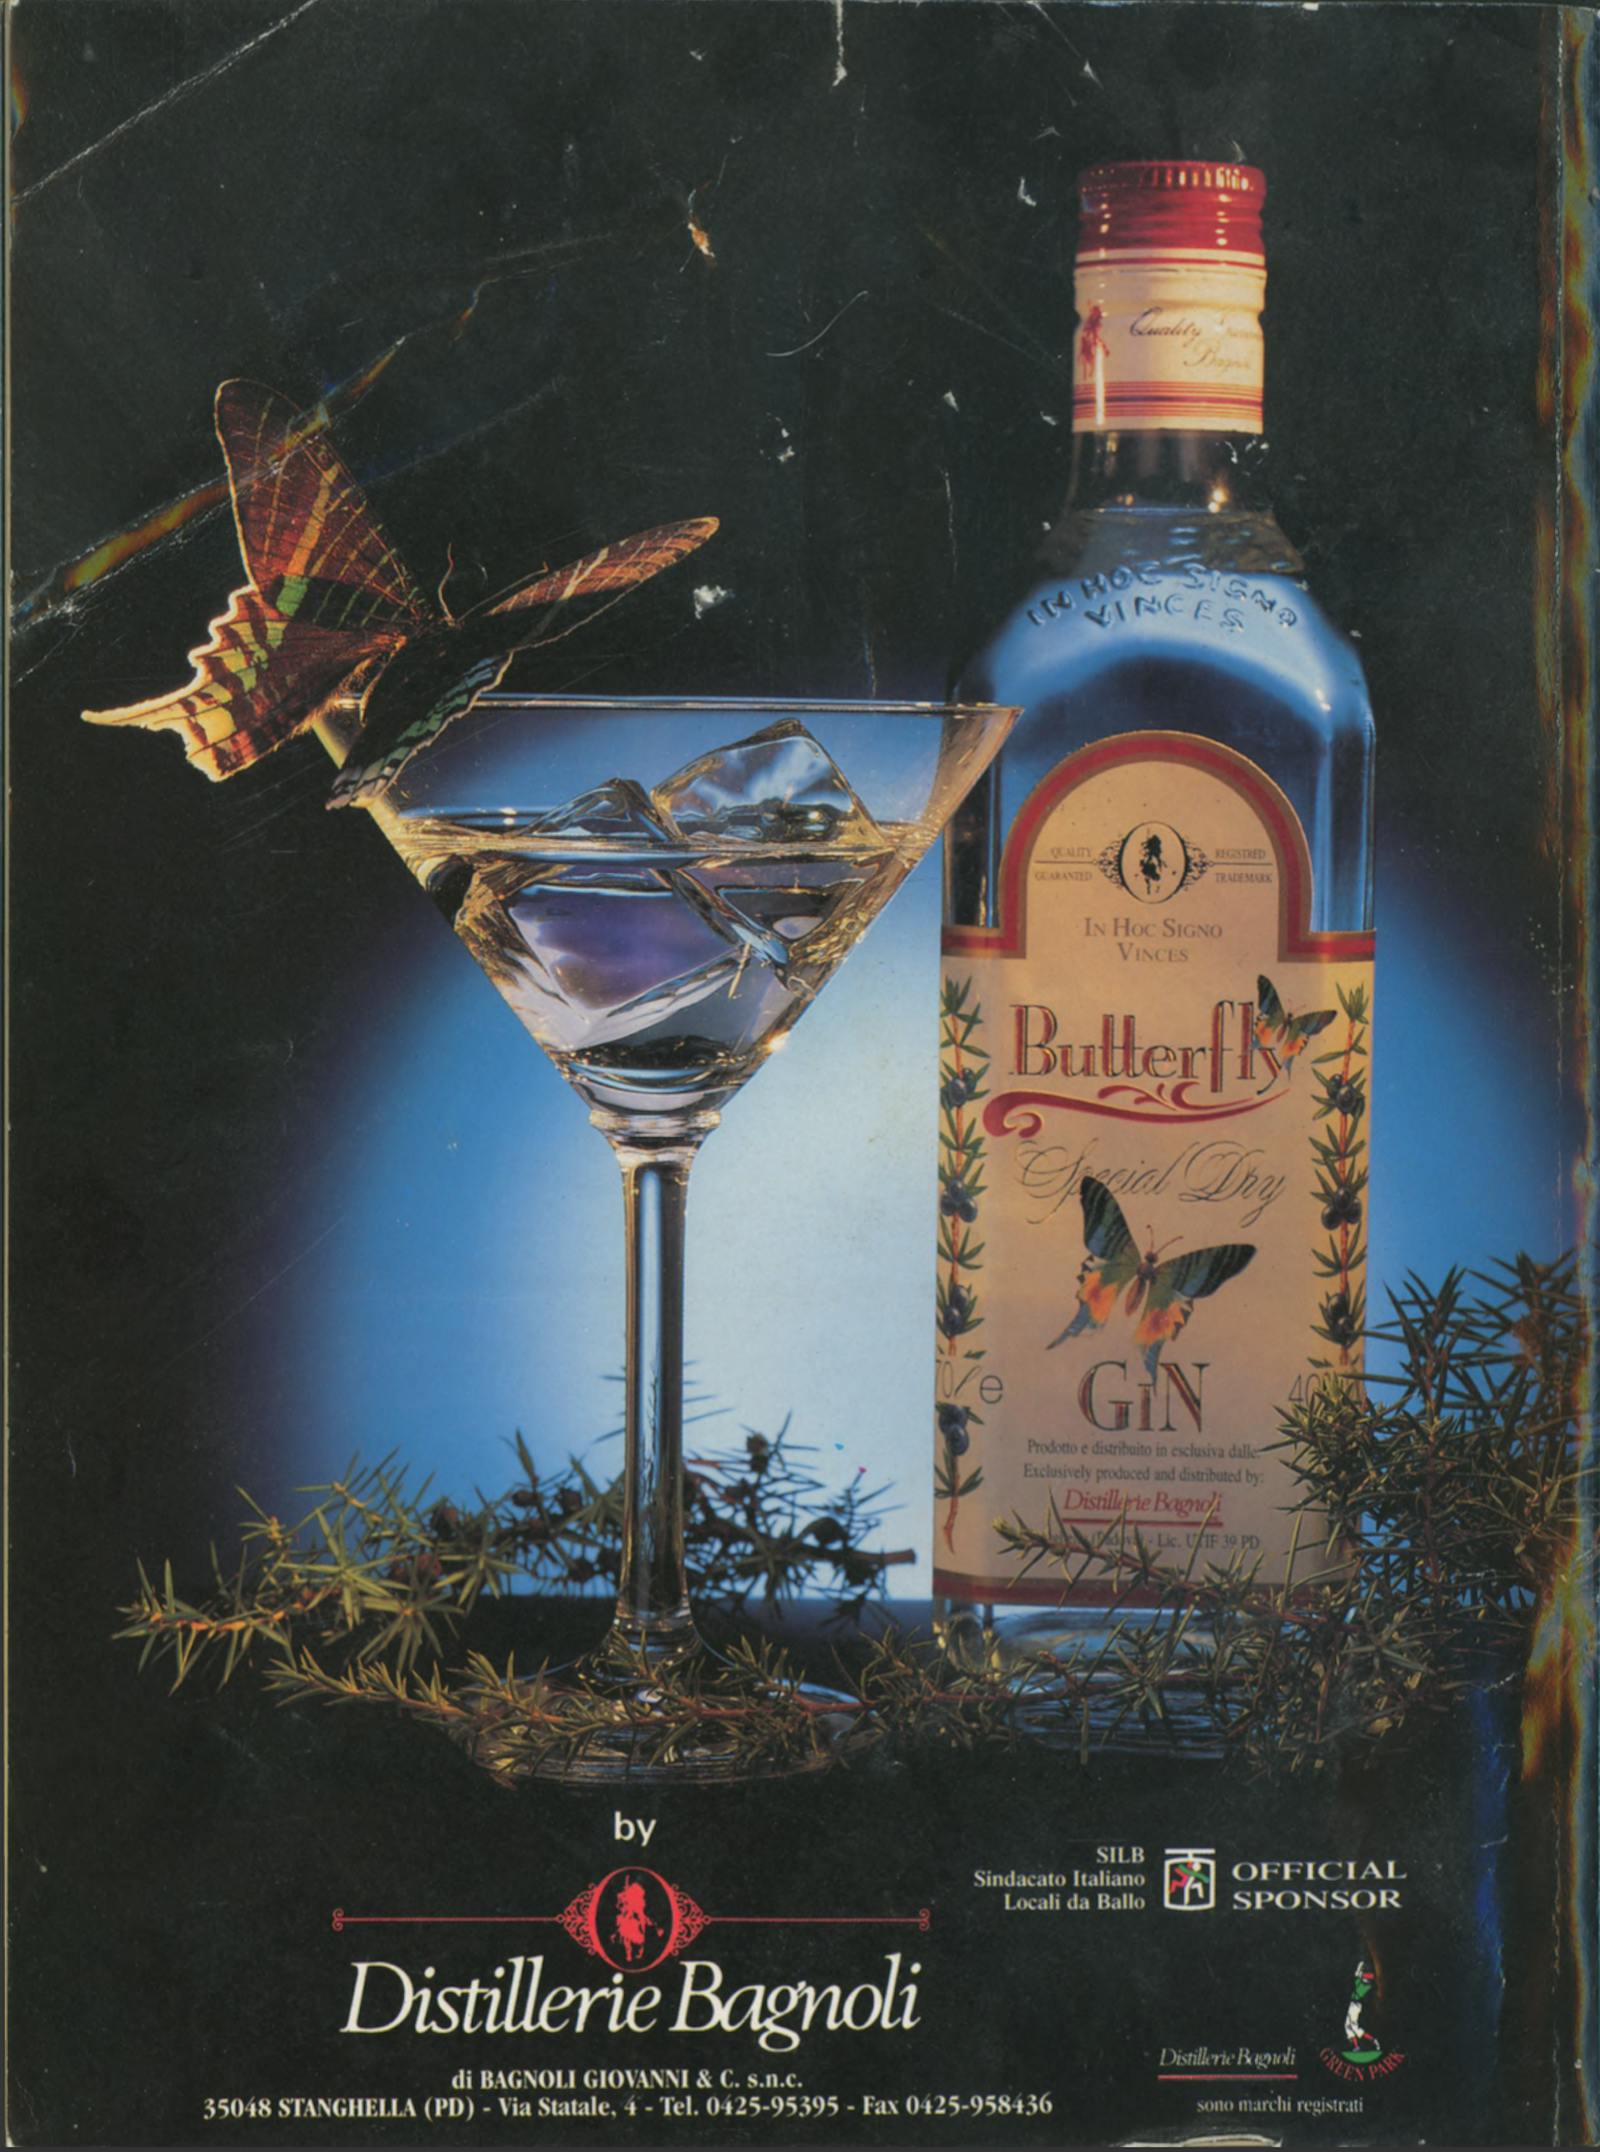 Pubblicità Distillerie Bagnoli: Butterfly Gin